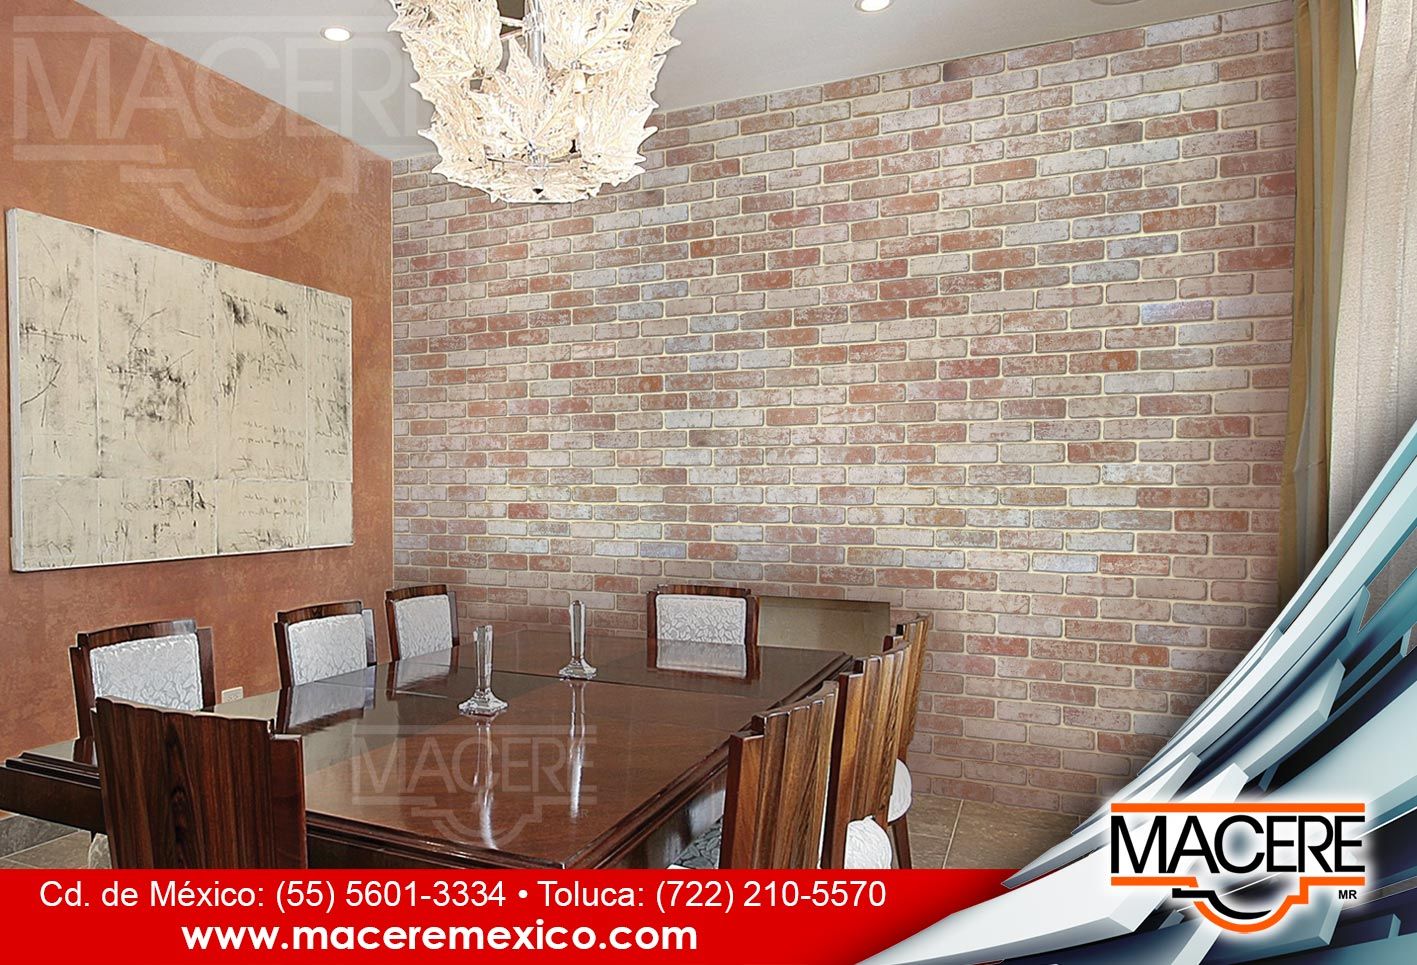 Fachaletas • Aparente de Barro tipo Ladrillo, MACERE México MACERE México Classic style dining room Bricks Accessories & decoration